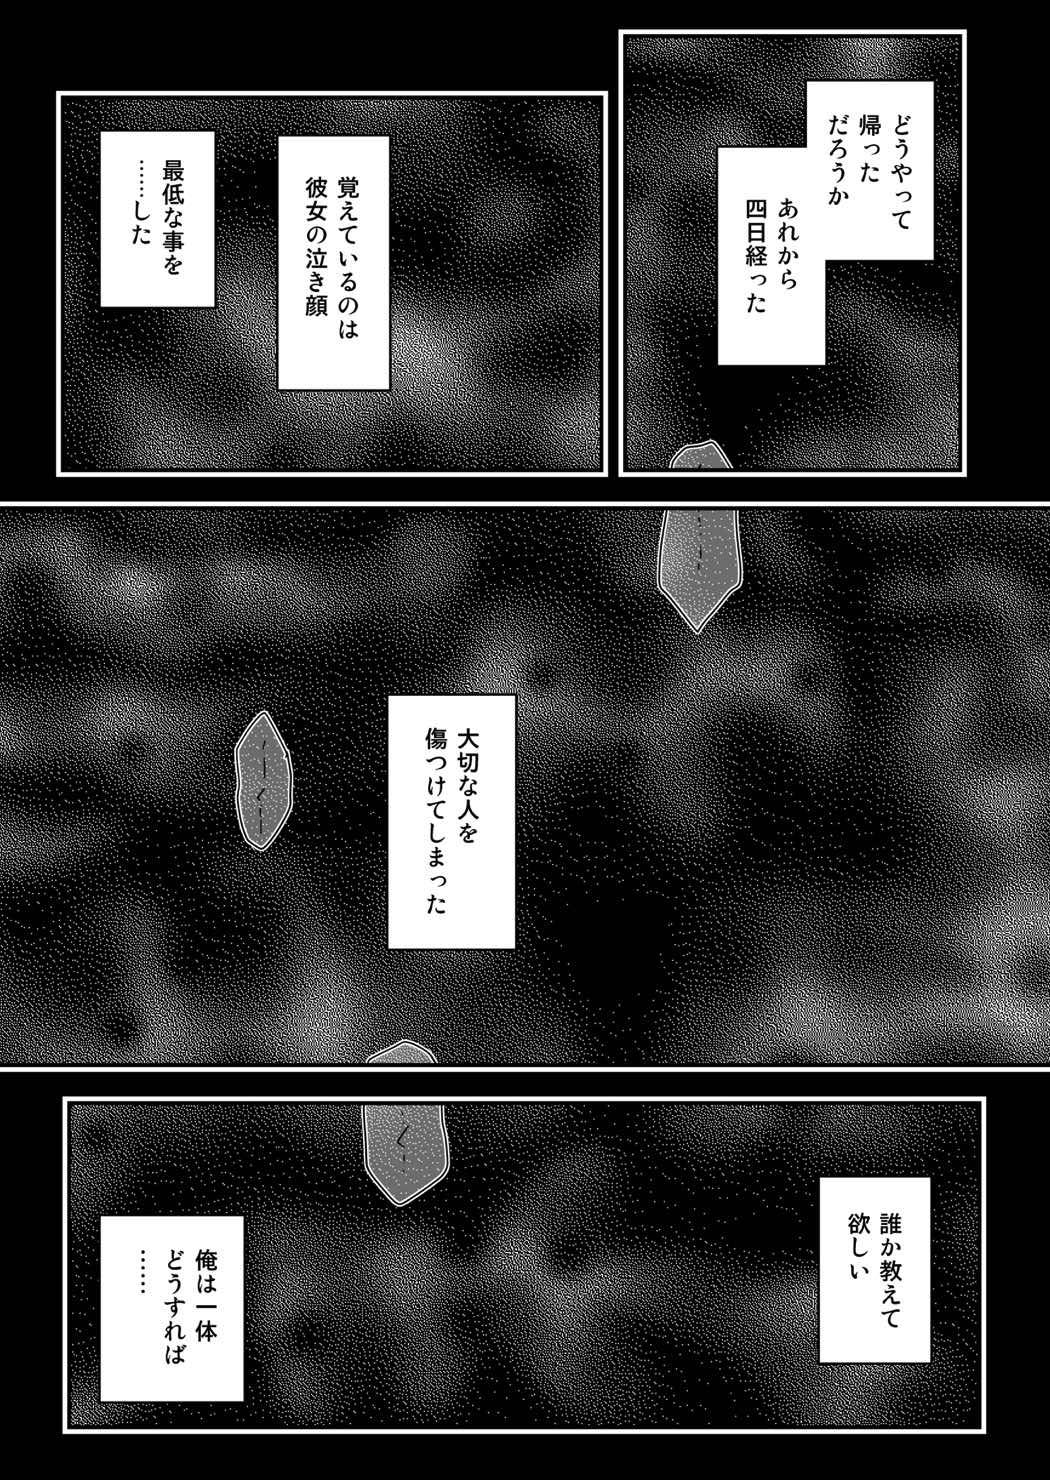 Petite Teen ＊＊＊＊＊＊＊＊＊! 2 - Seitokai yakuindomo Indoor - Page 2